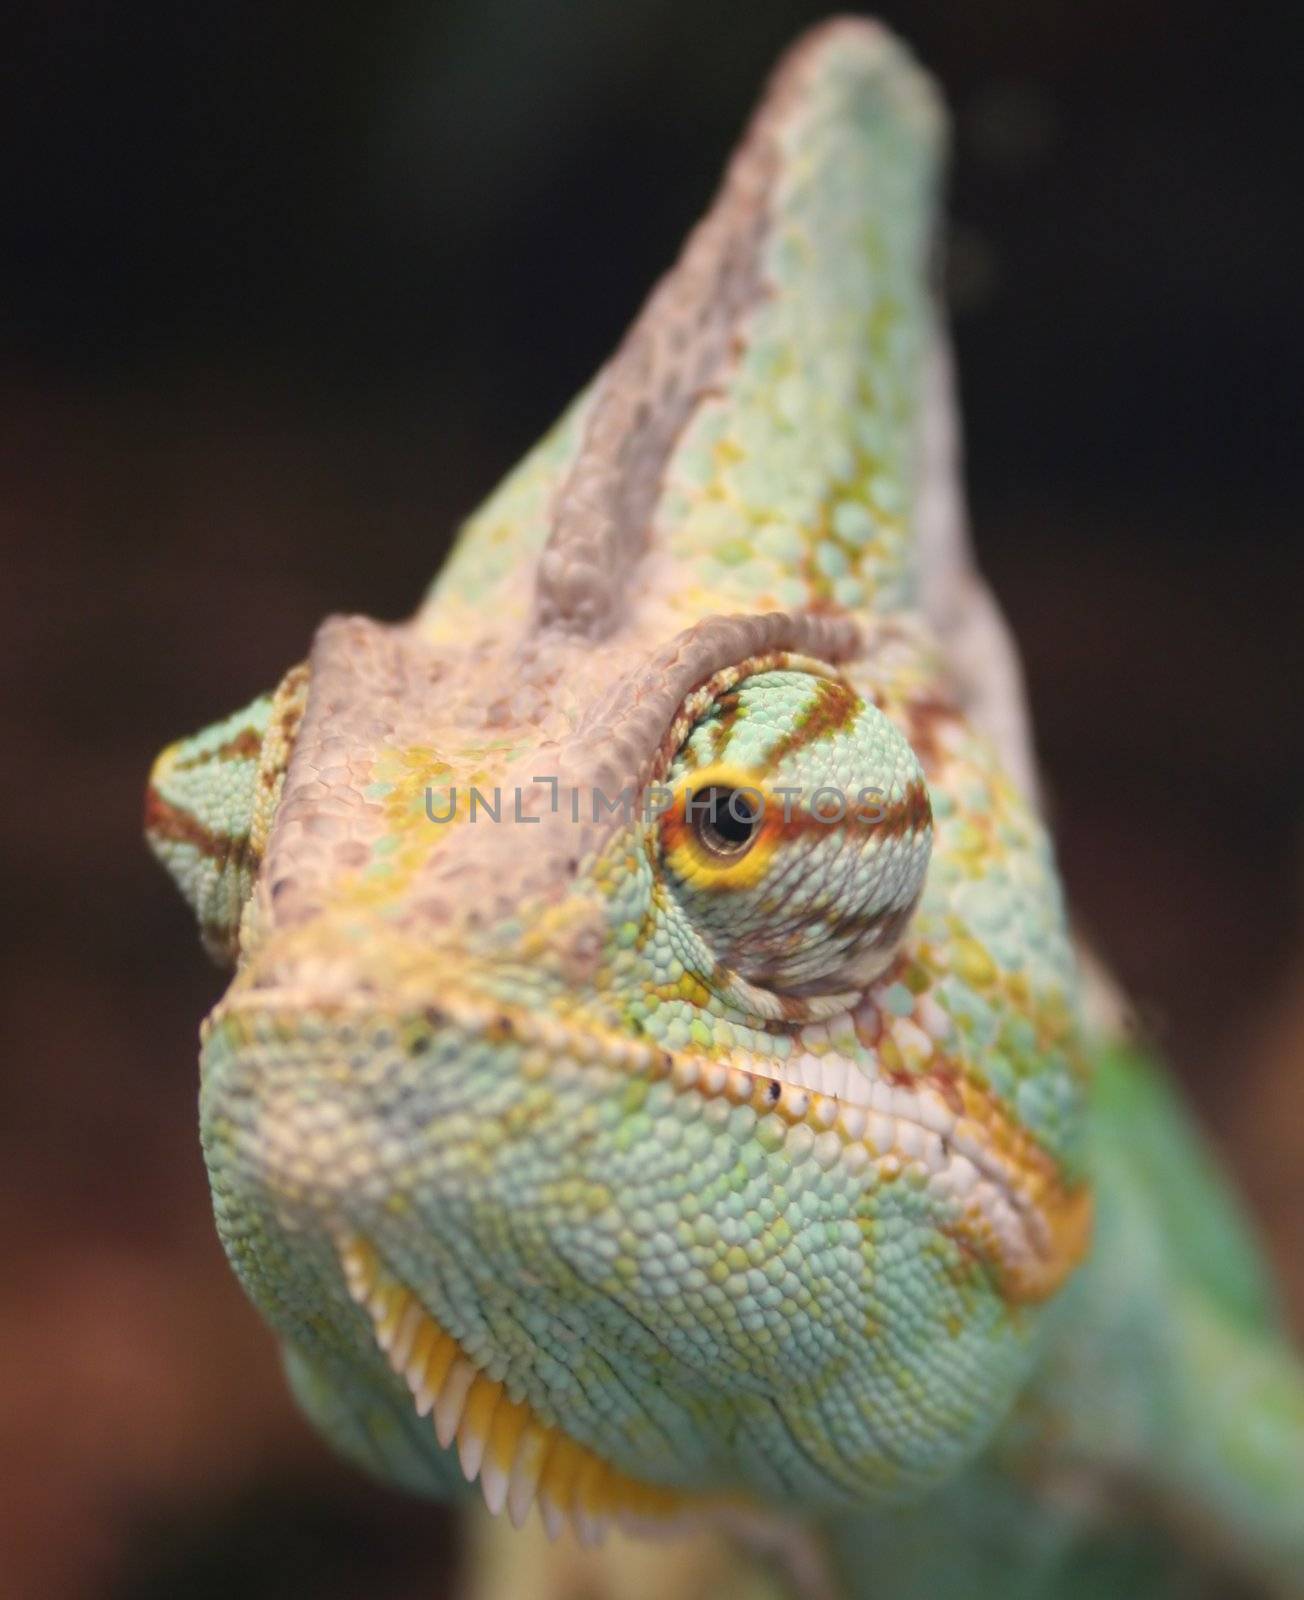 chameleon close up photo - vivid colored